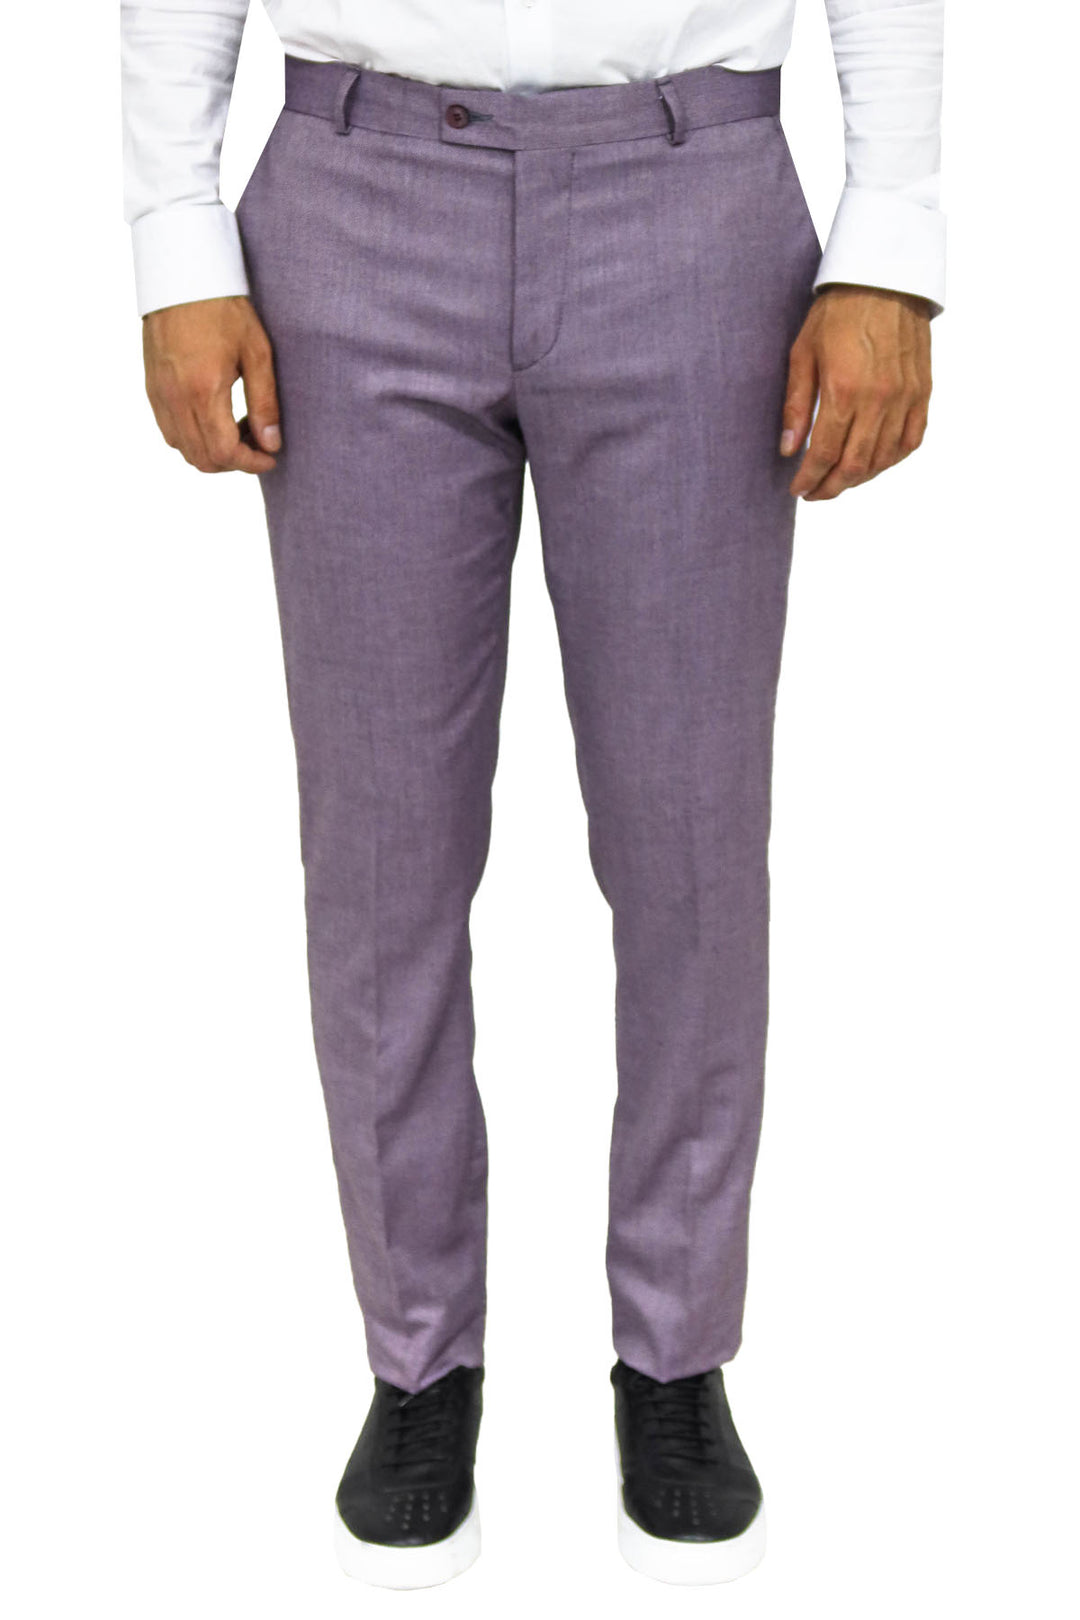 Slim Fit Textured Purple Men Trousers - Wessi